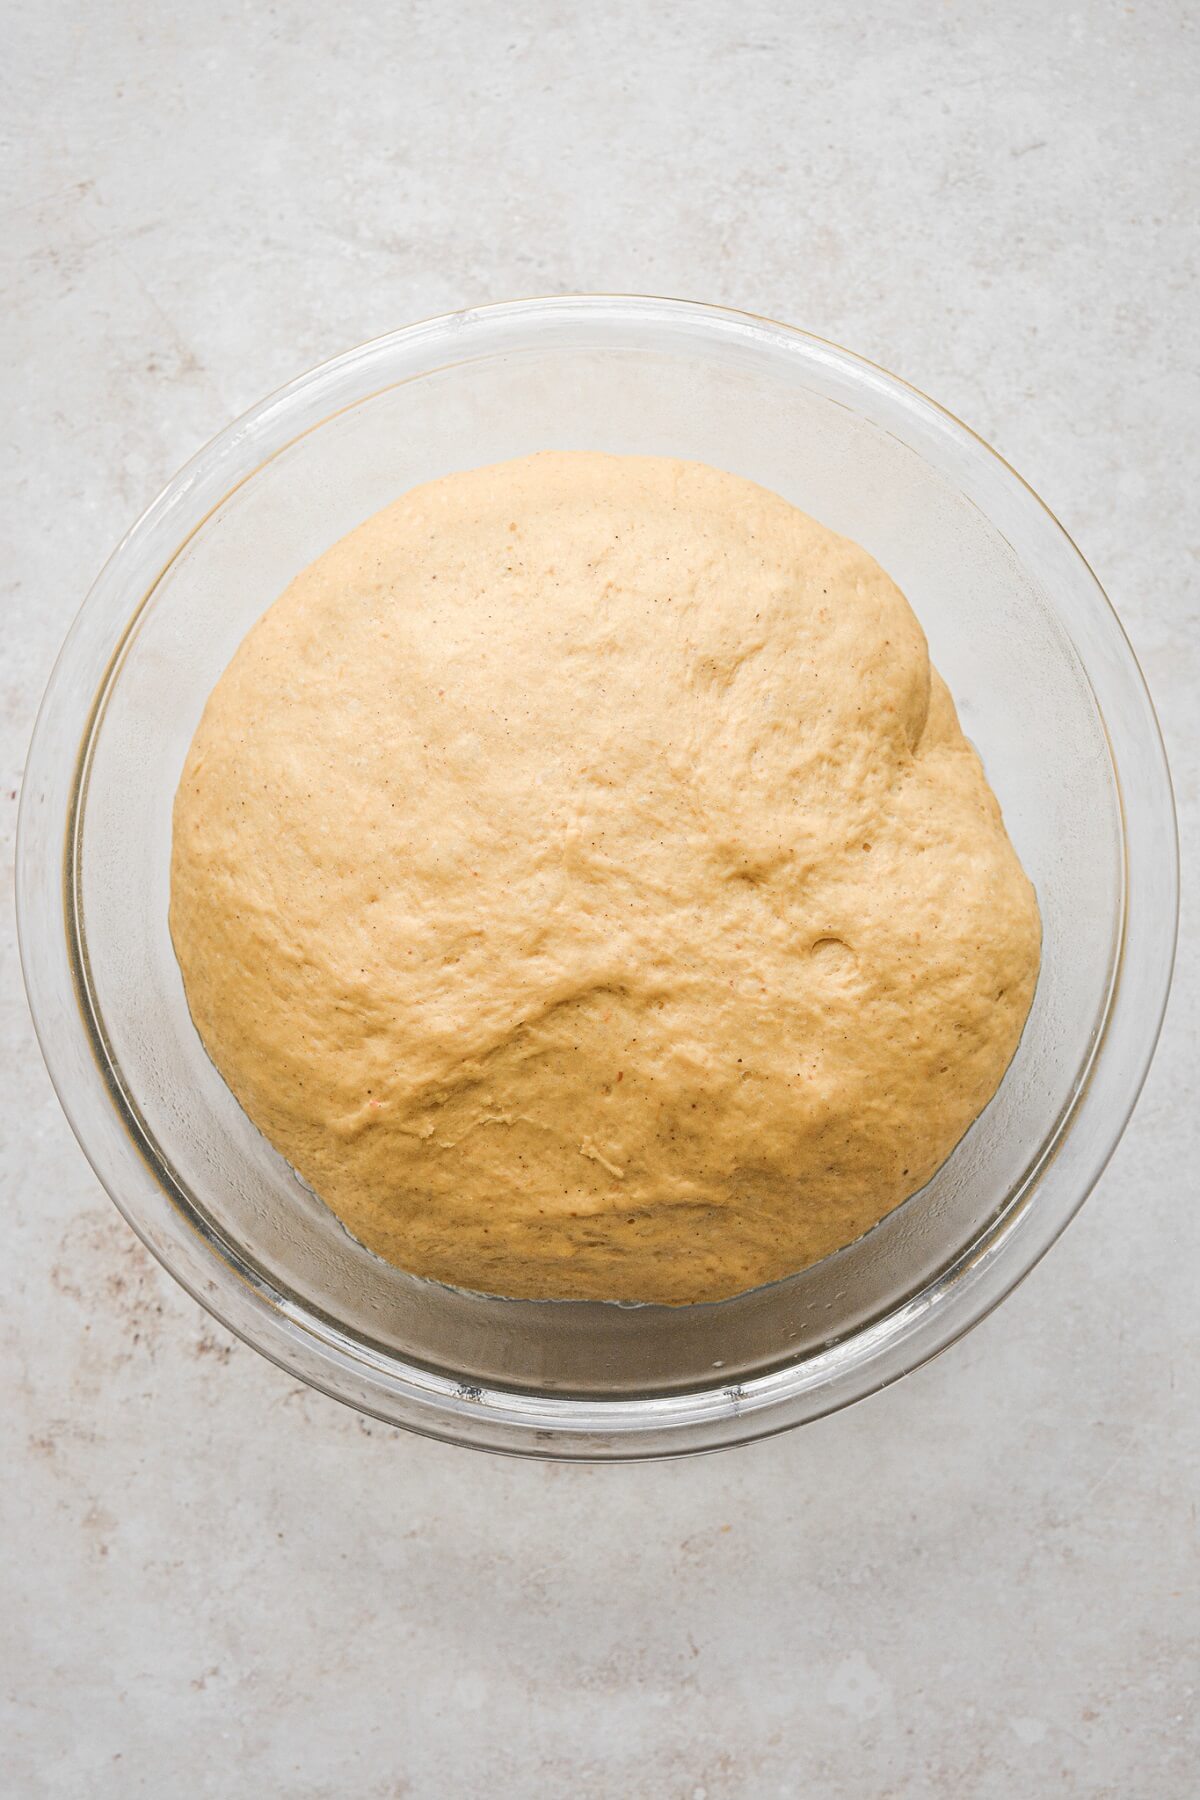 Pumpkin roll dough, risen to the top of a bowl.